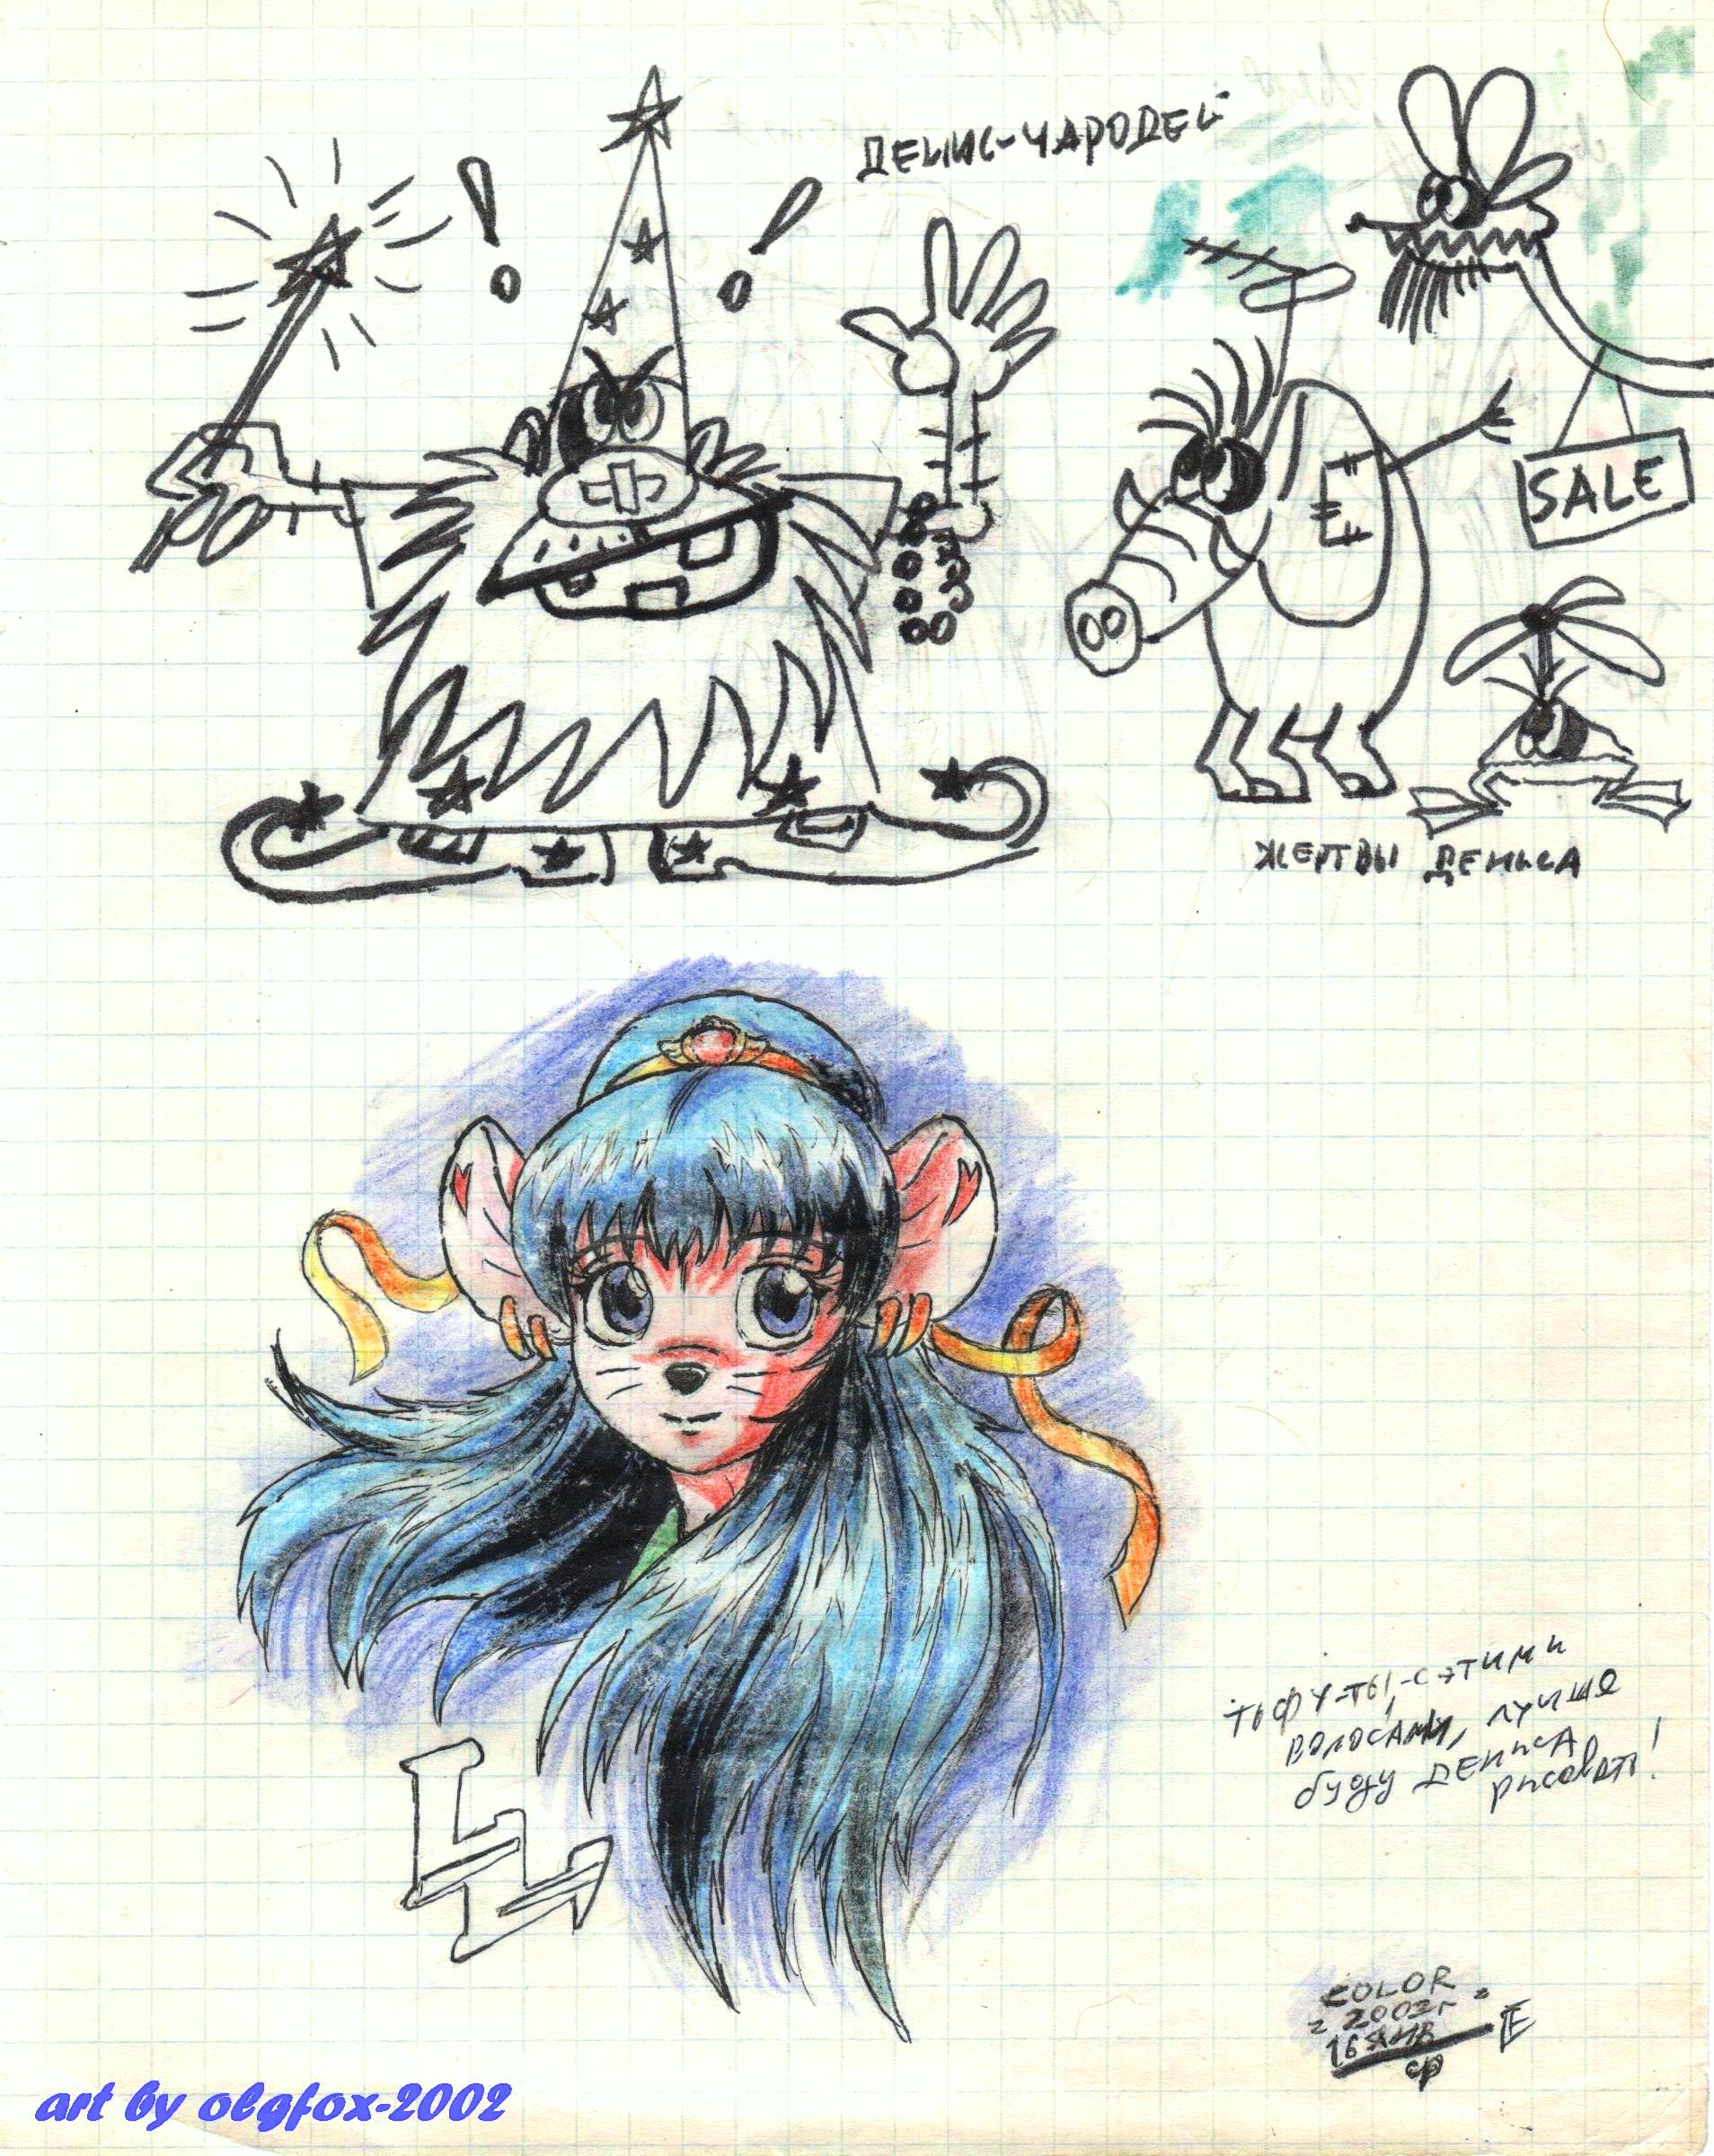 PrincessMouse manga  by Olgfox-2002.jpg